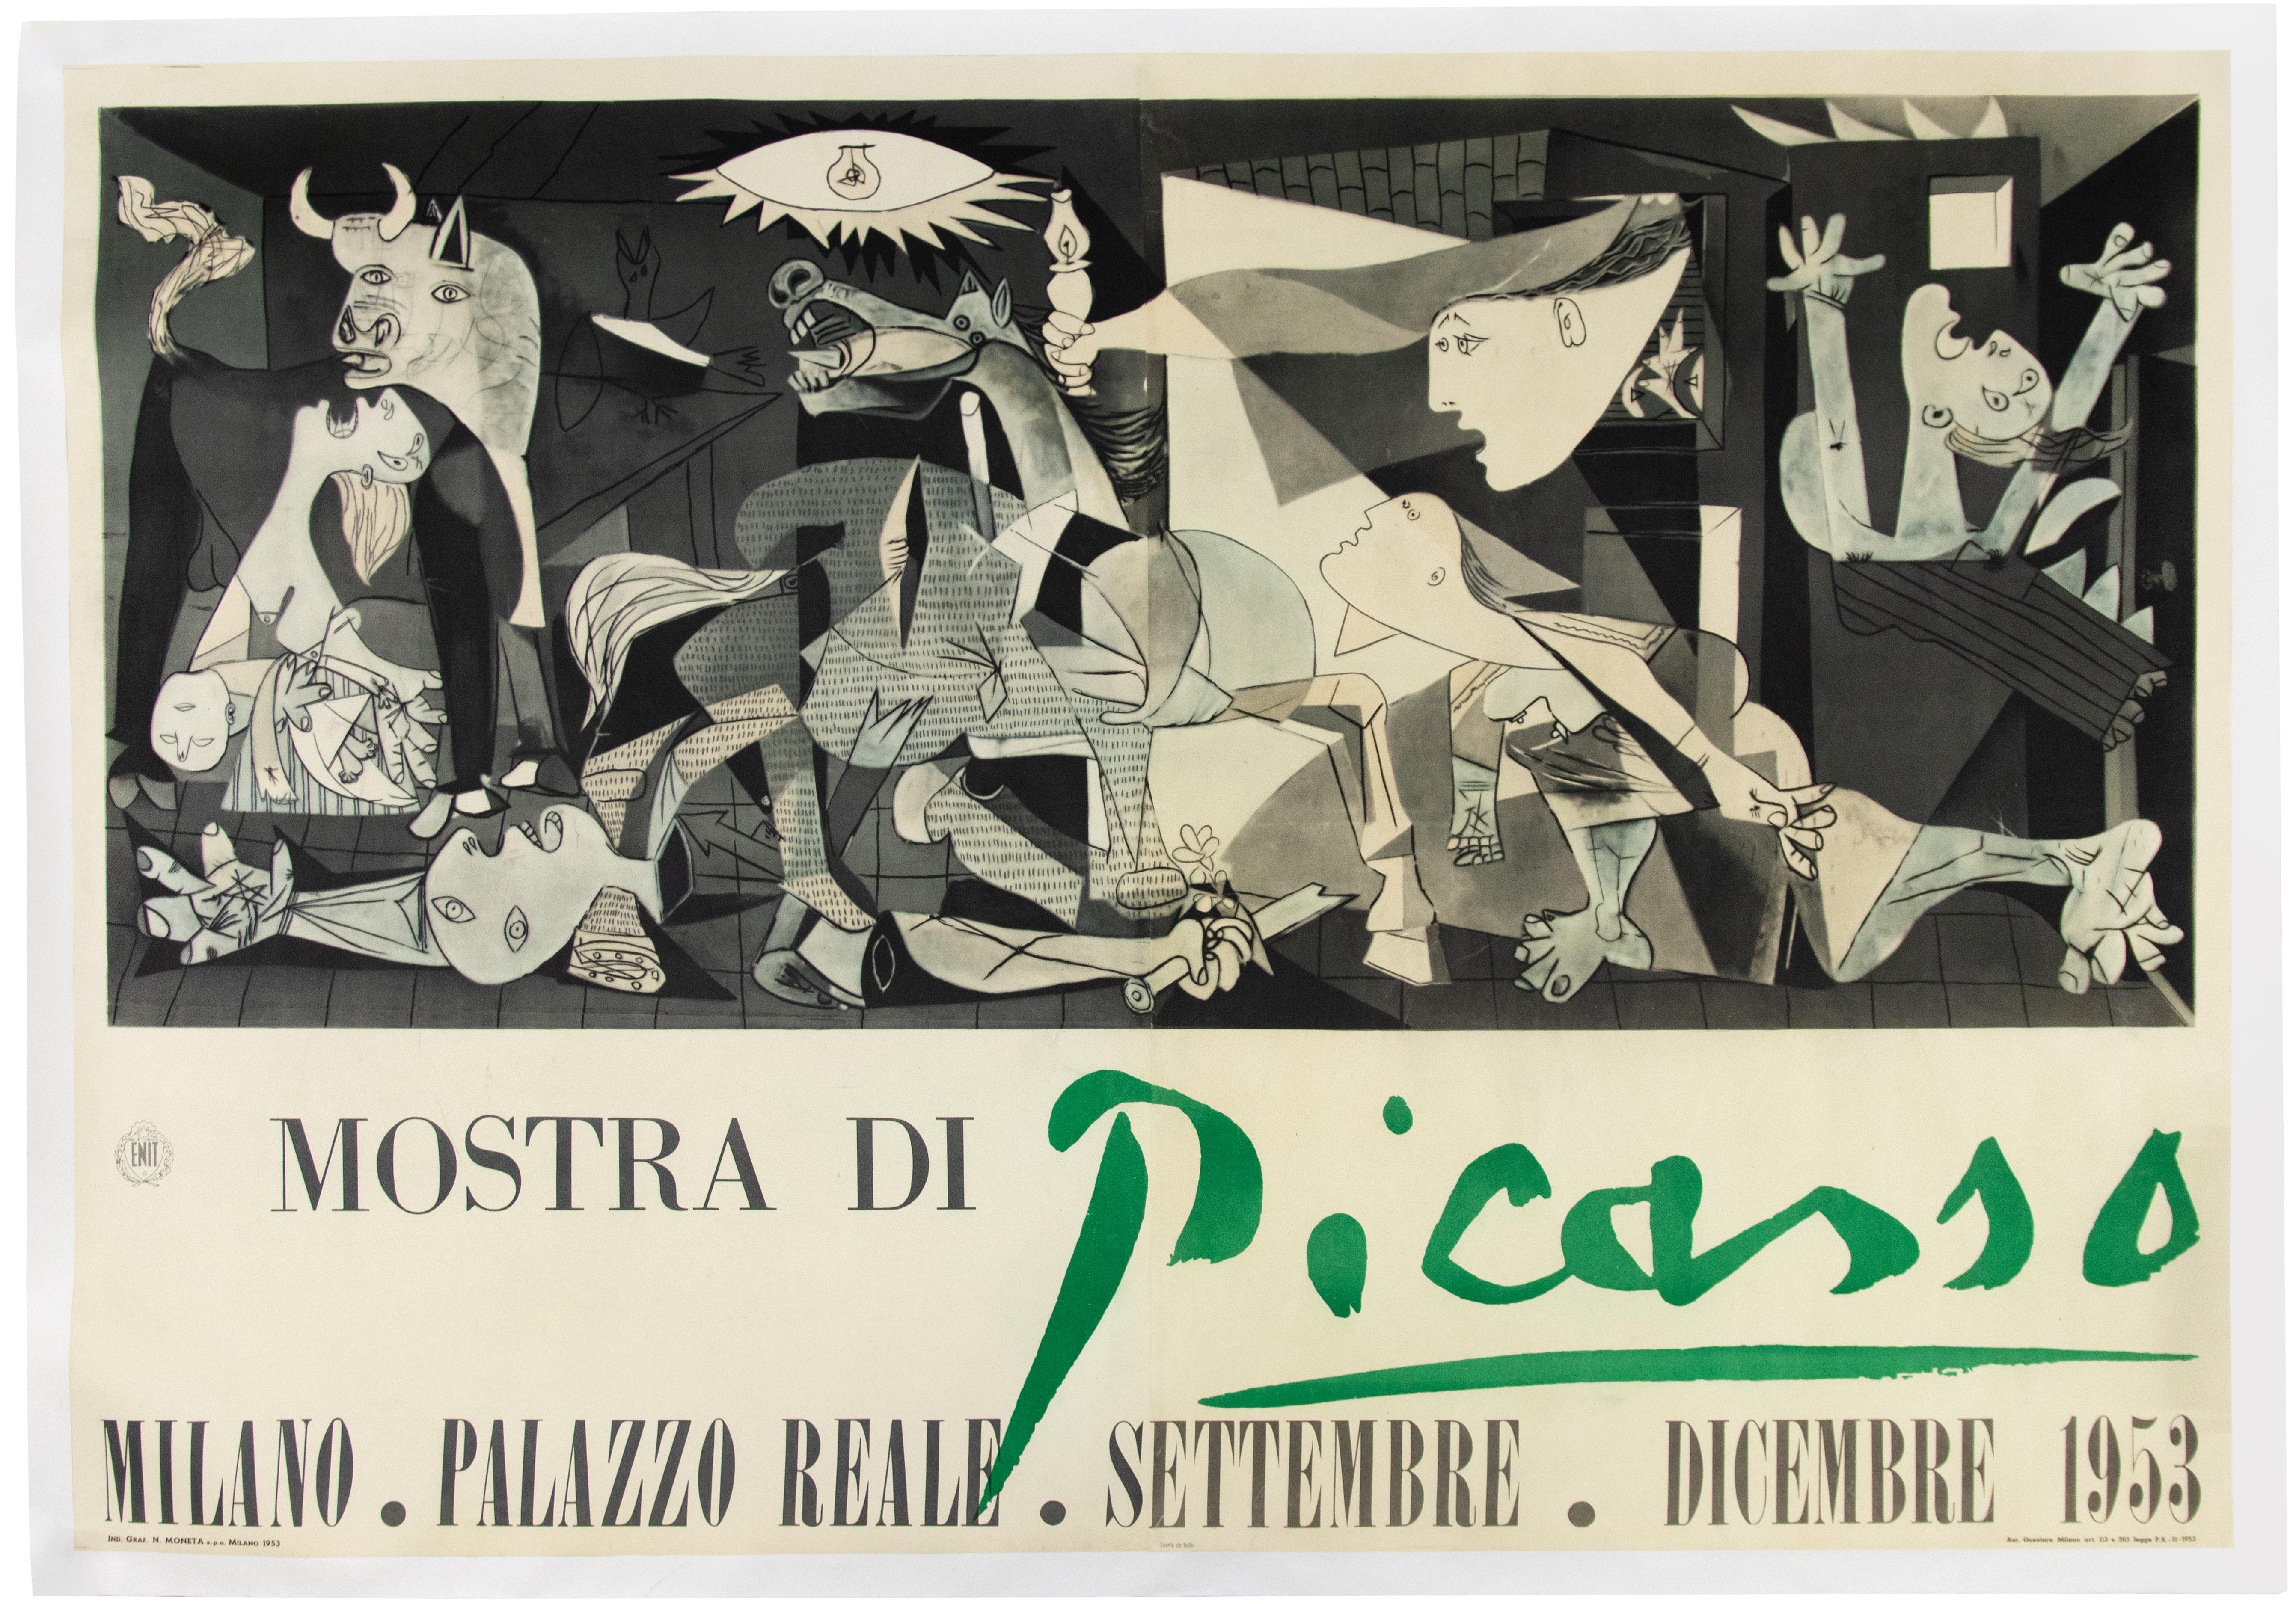 Pablo Picasso Print – Nach Picasso-Ausstellungsplakat, "Mostra di Picasso", das Guernica darstellt - 1953